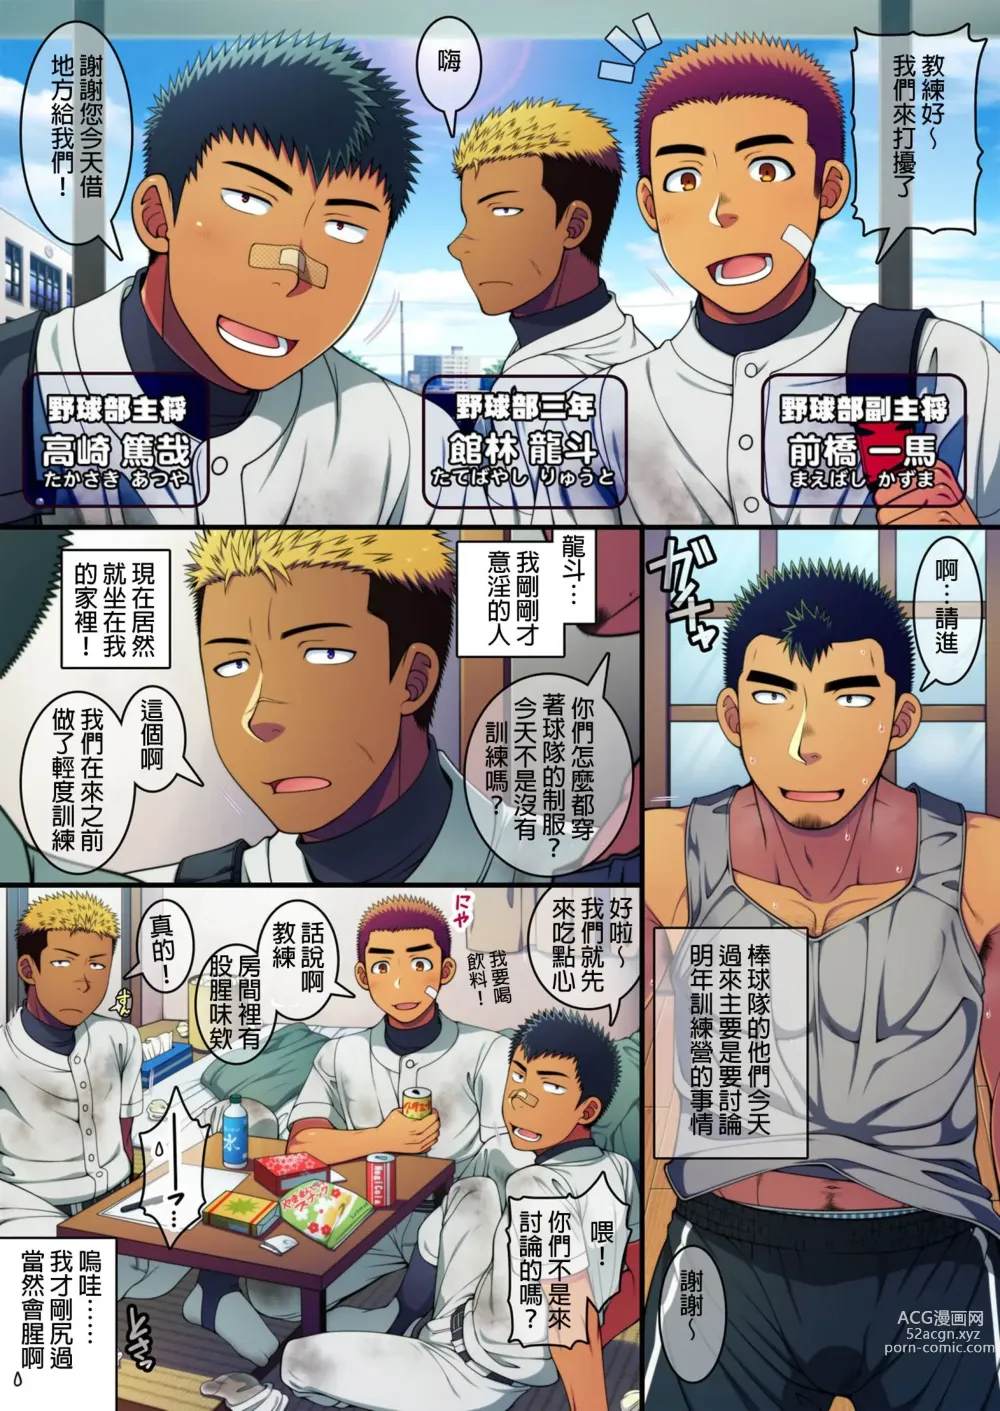 Page 6 of doujinshi 童貞教練暗戀著棒球隊隊員無法自拔著迷於他的大肉棒!